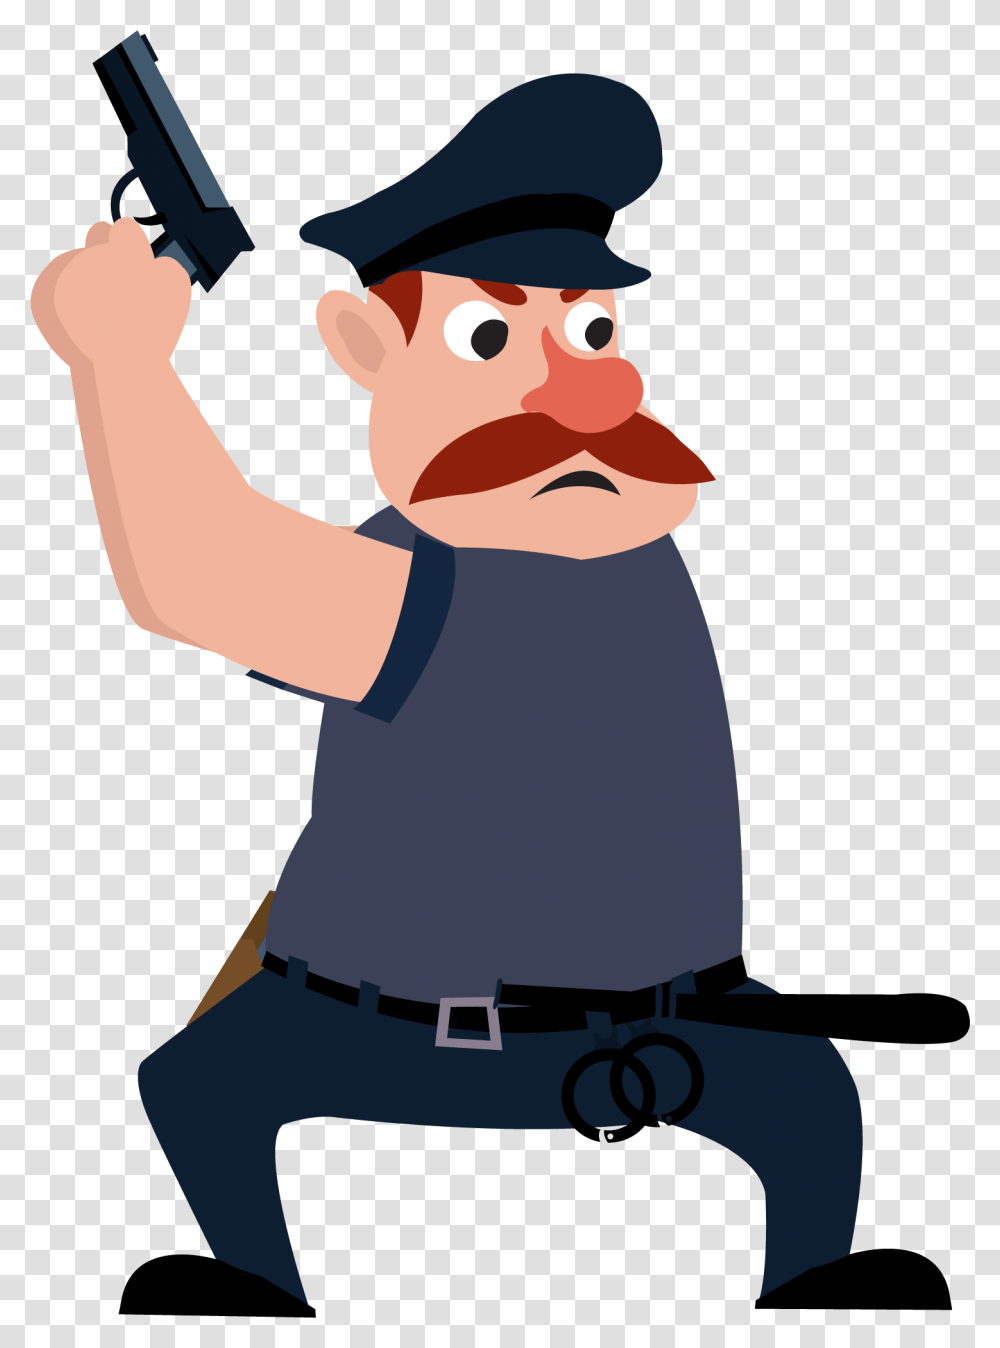 Cartoon Officer Icon Criminal Holding A Gun Cartoon Animated Criminal, Person, Human, Arm, Clothing Transparent Png